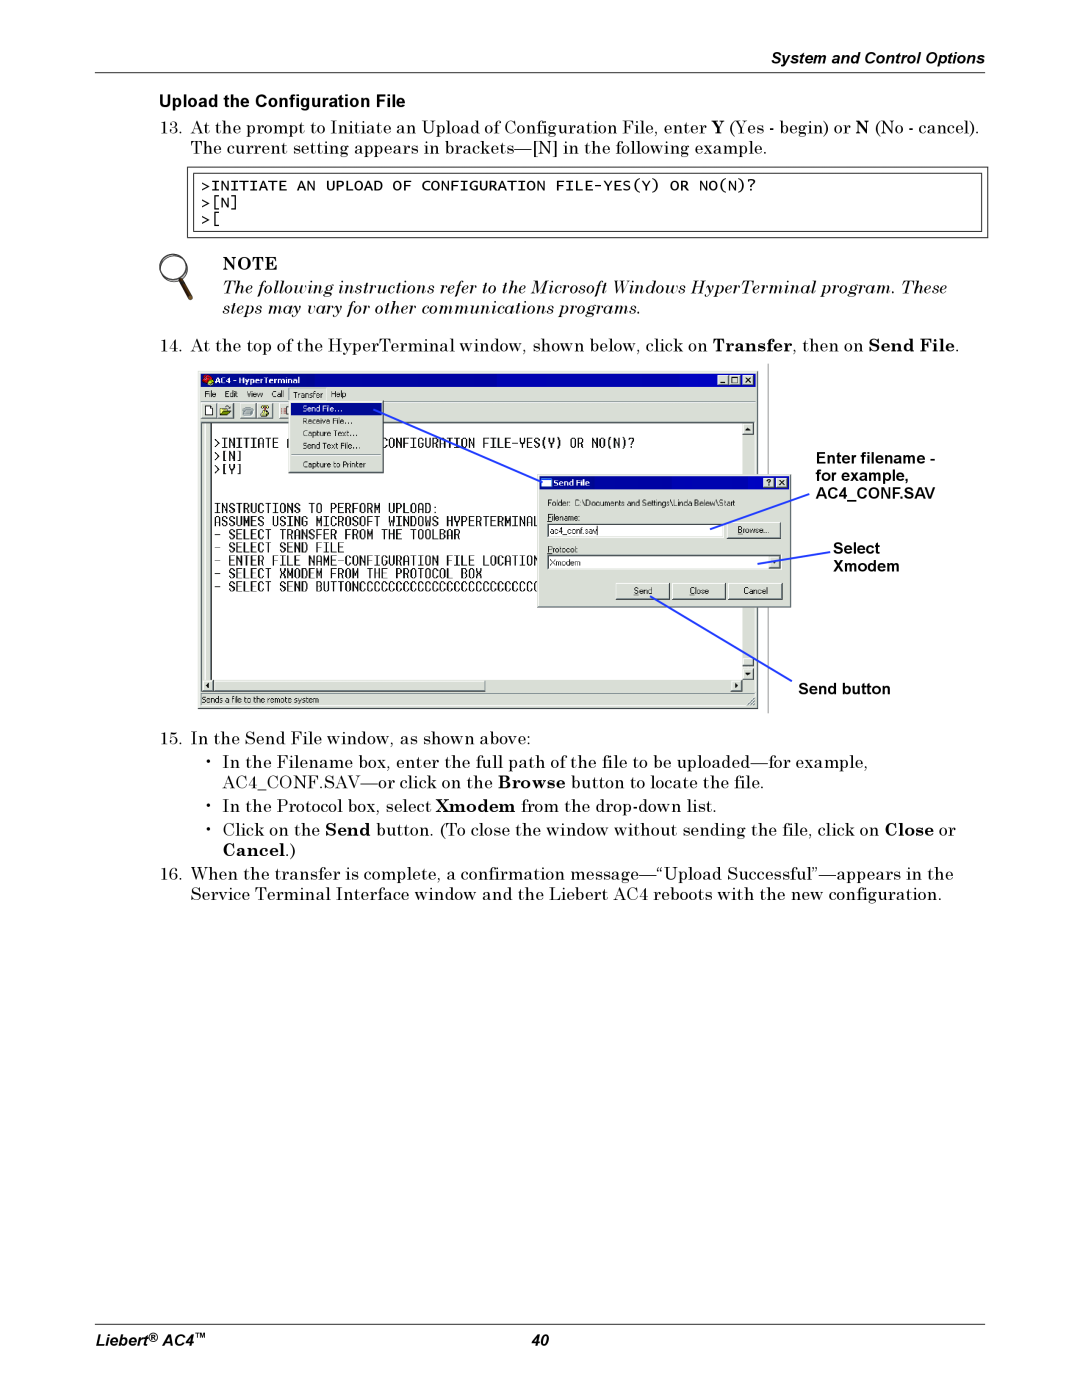 Emerson AC4 user manual Upload the Configuration File 